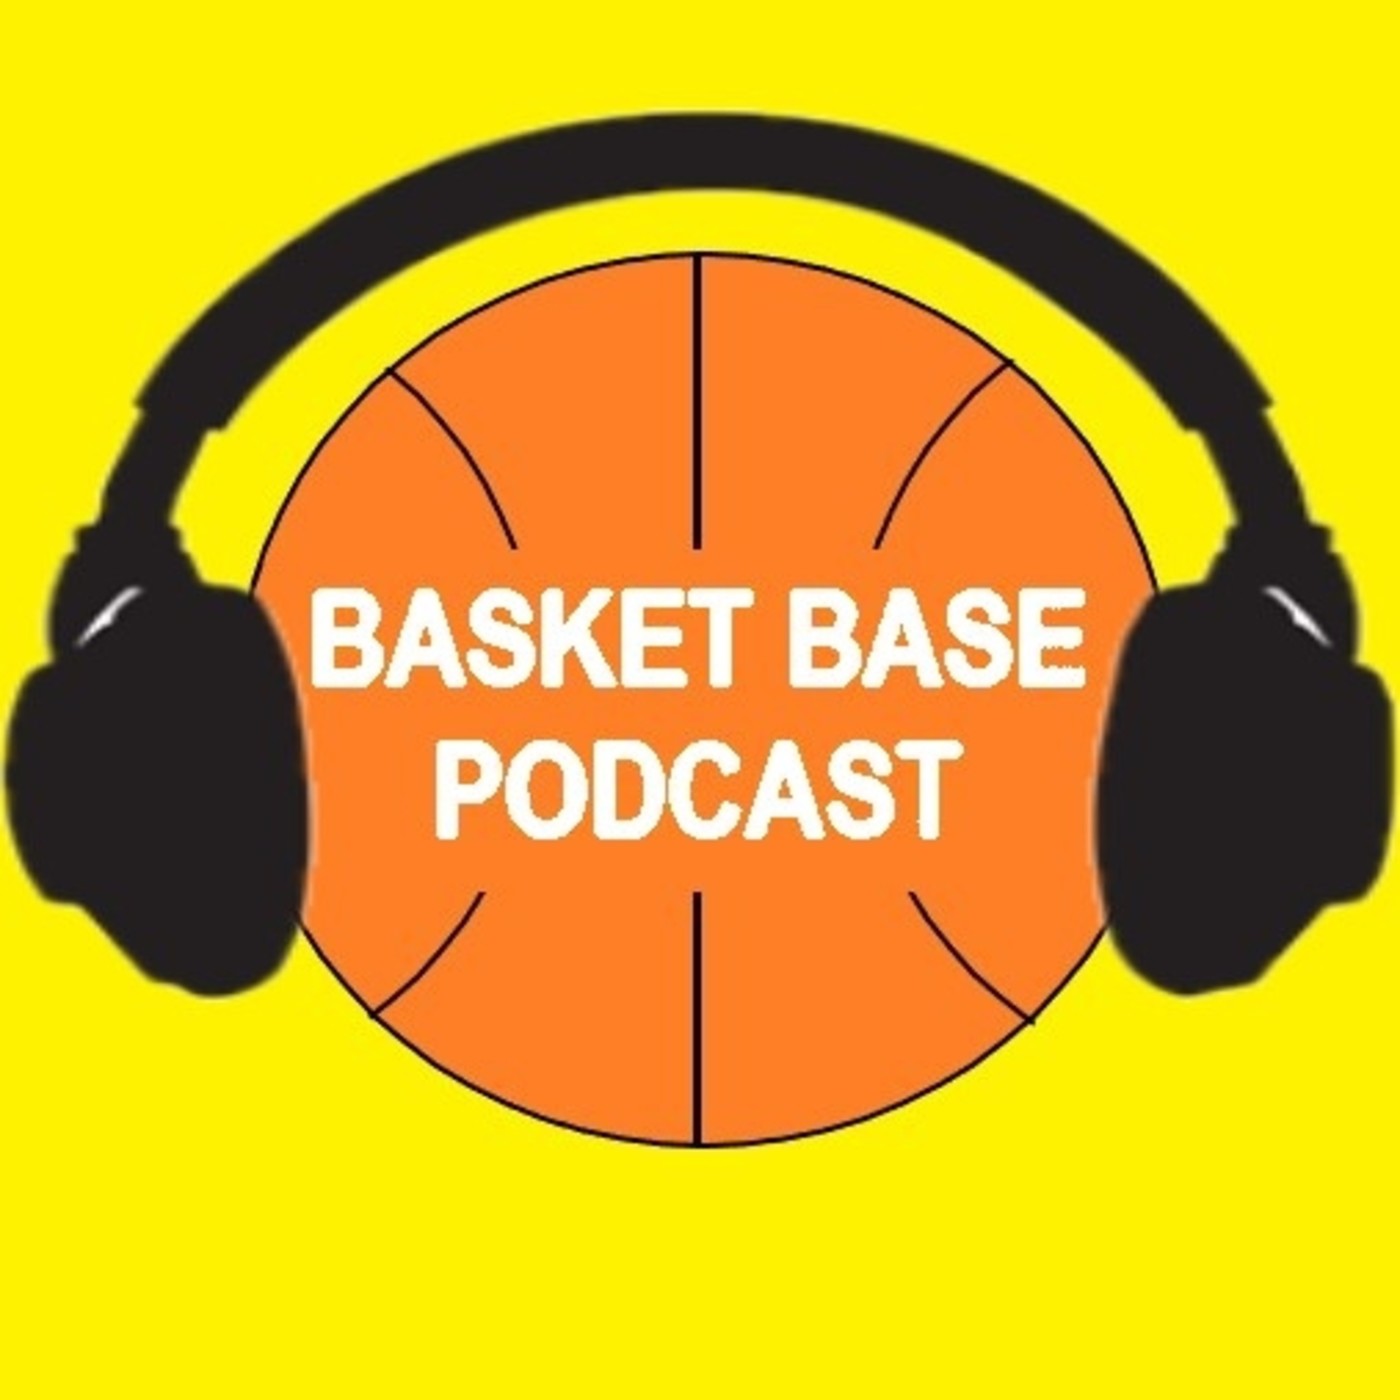 Basket Base Podcast - Episodio 1 - Presentación de los colaboradores